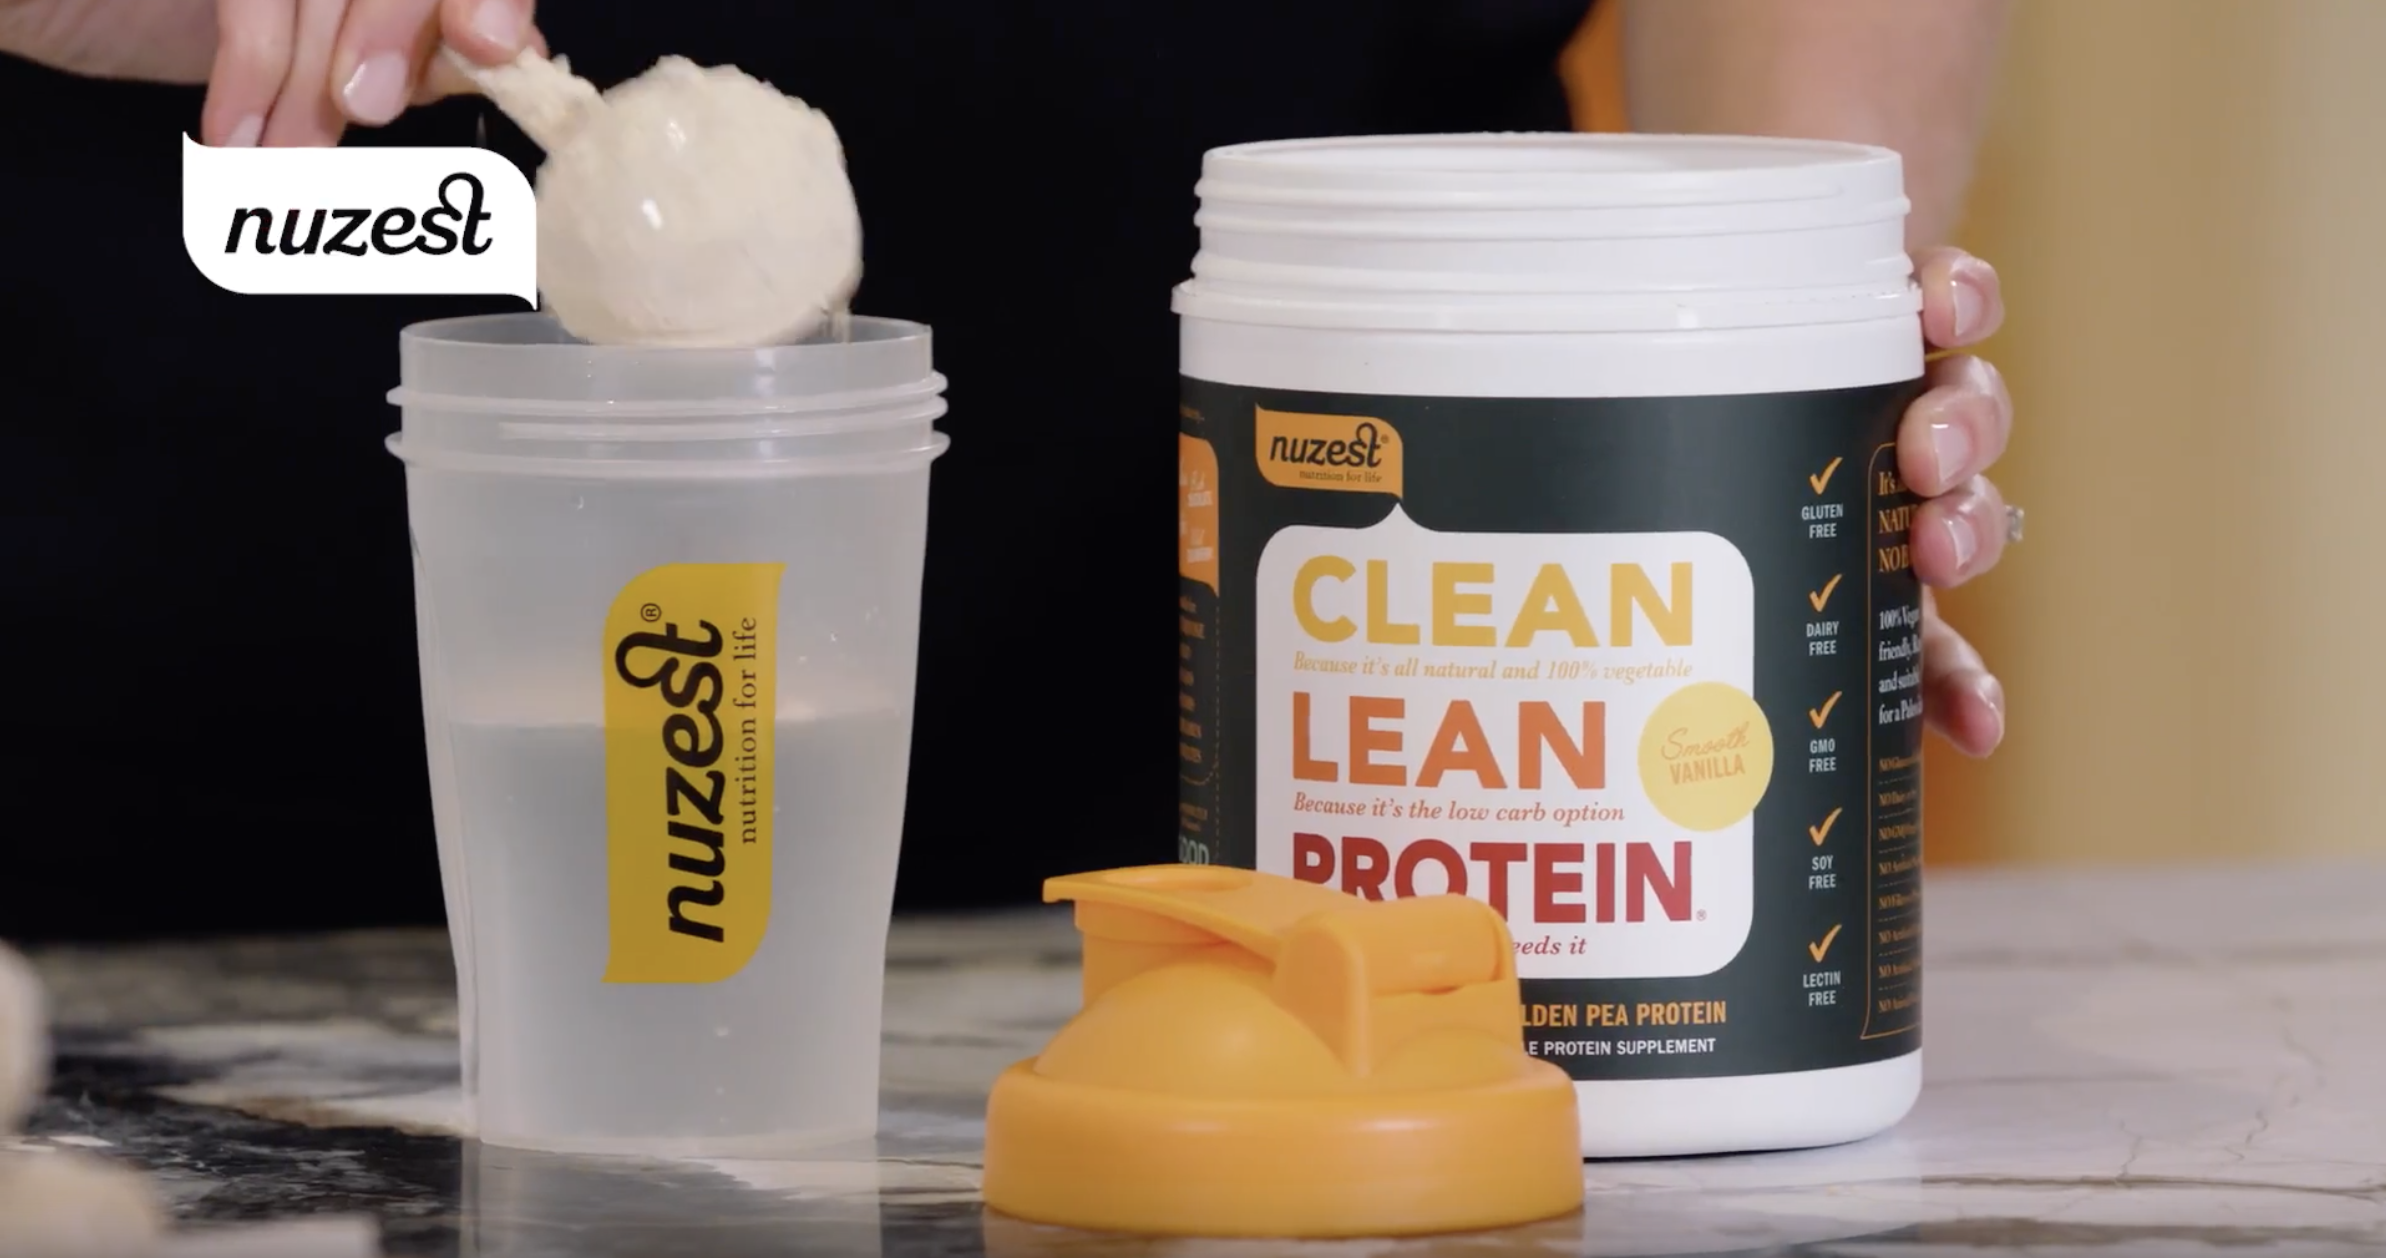 Buy Nuzest Clean Lean Protein 1KG, Get 1 FREE Kids Good Stuff